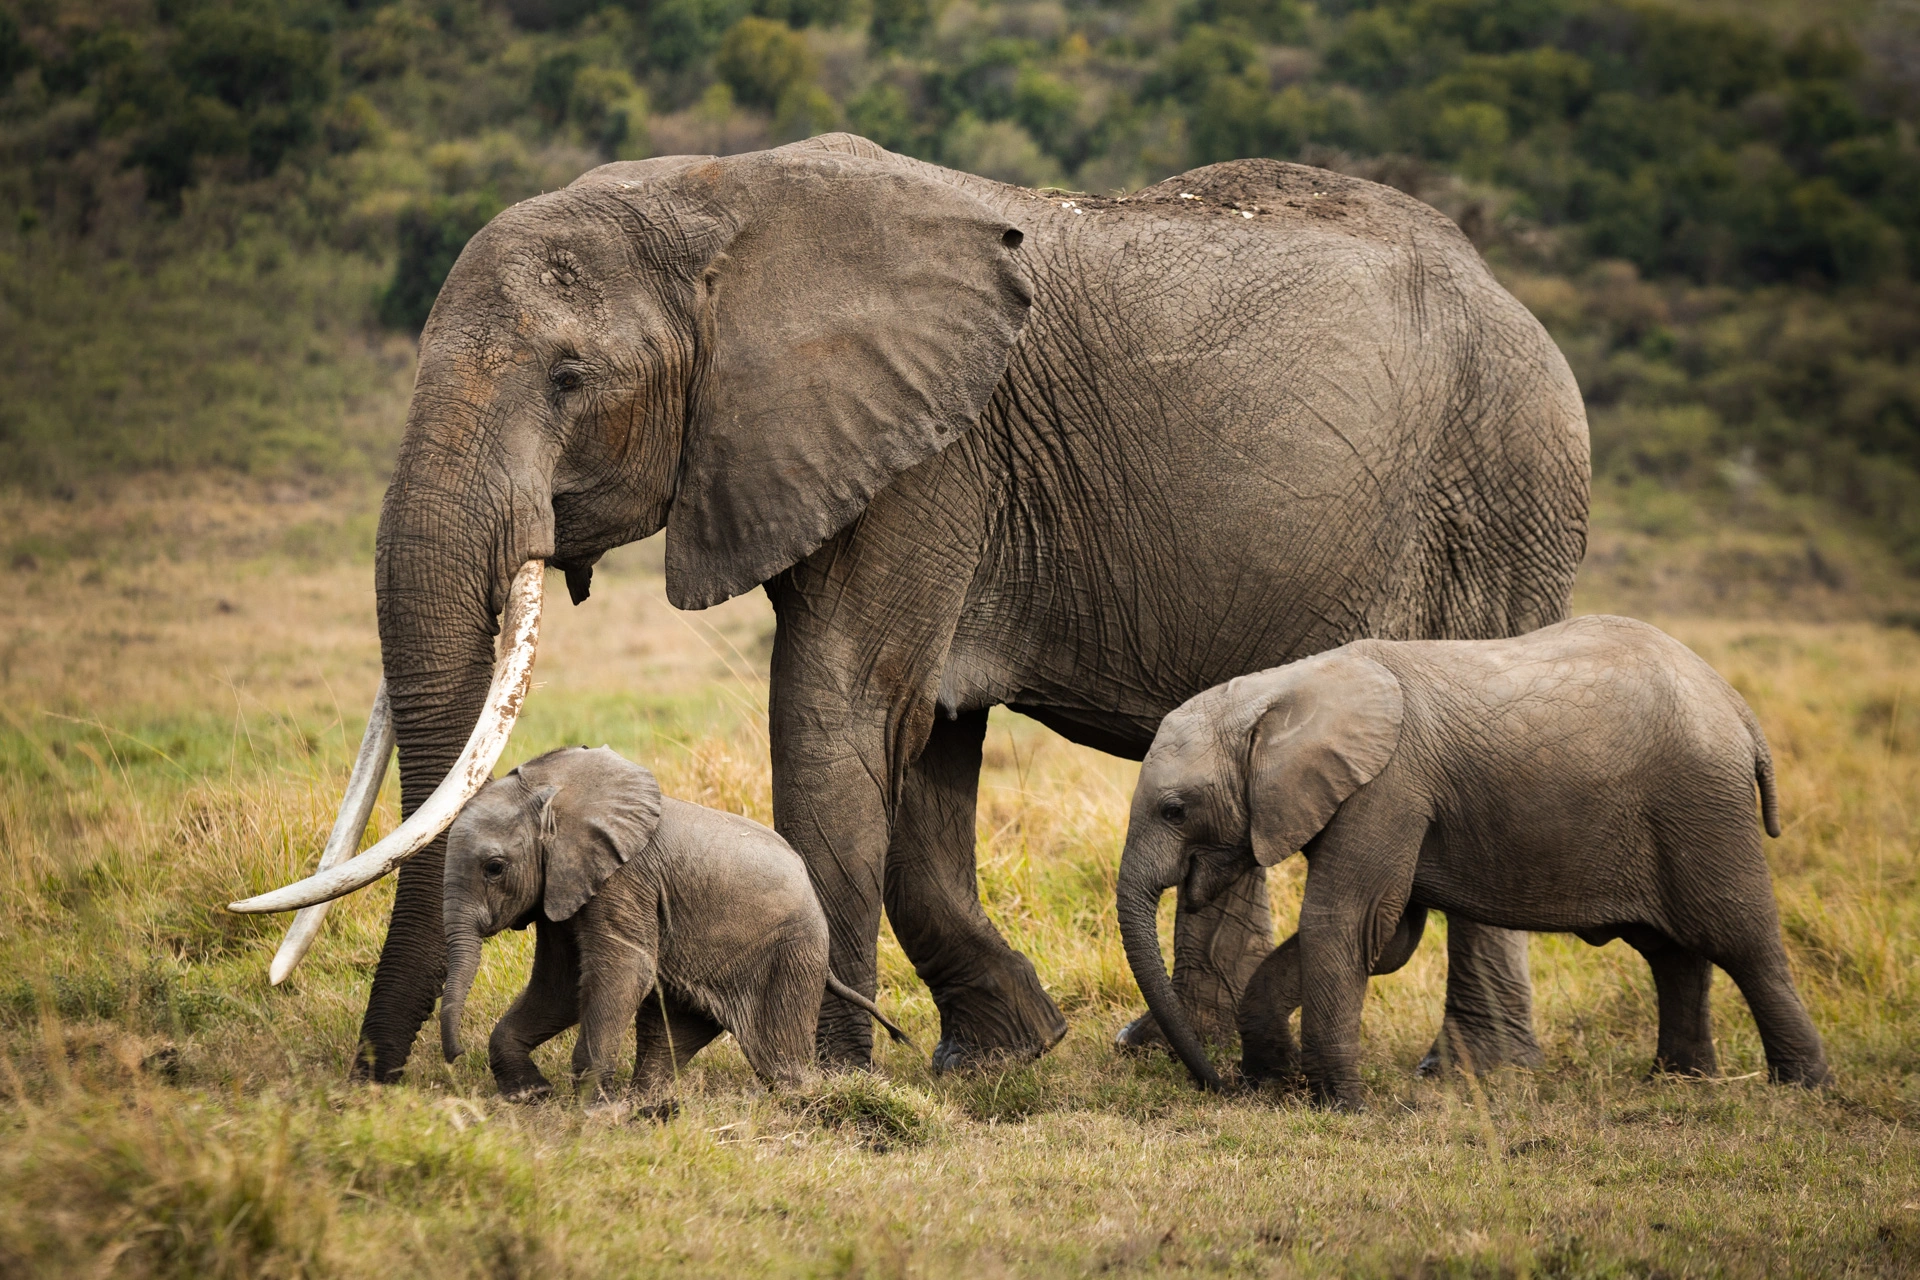 Honeymoons safaris in Kenya - Elephants spotted during a honeymoons trip in Masai Mara.